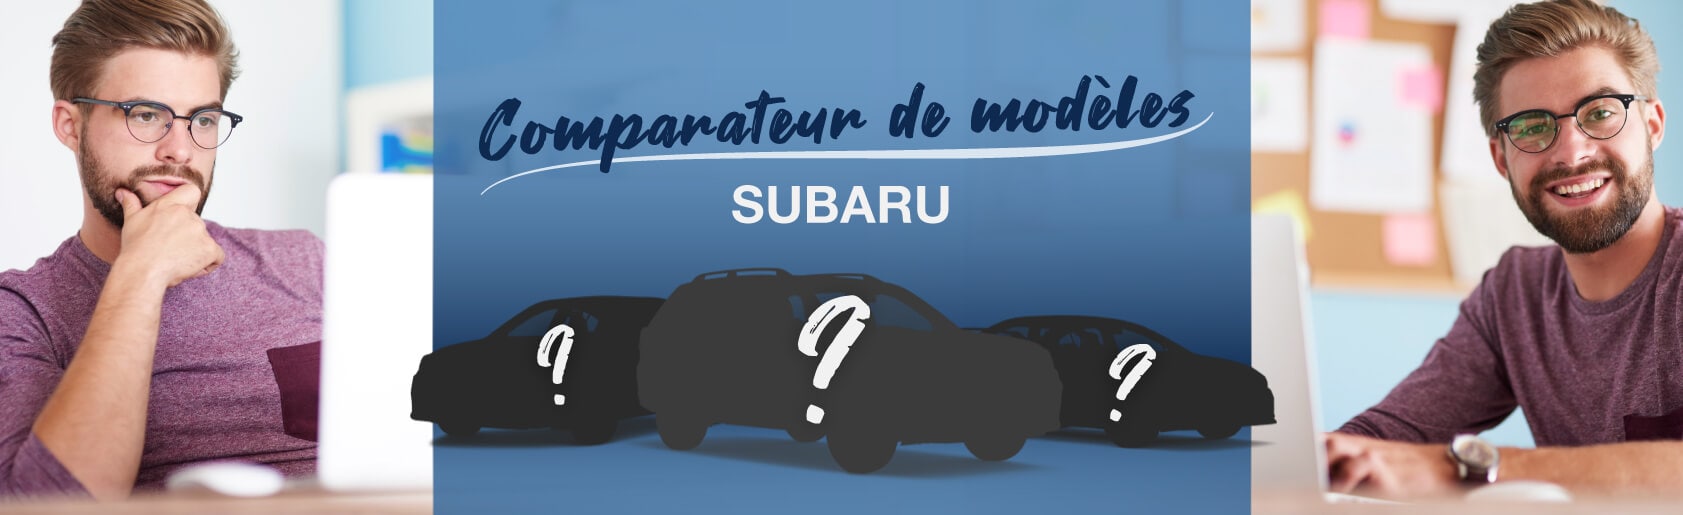 Comparaison des Modèles VUS Subaru - Desjardins Subaru